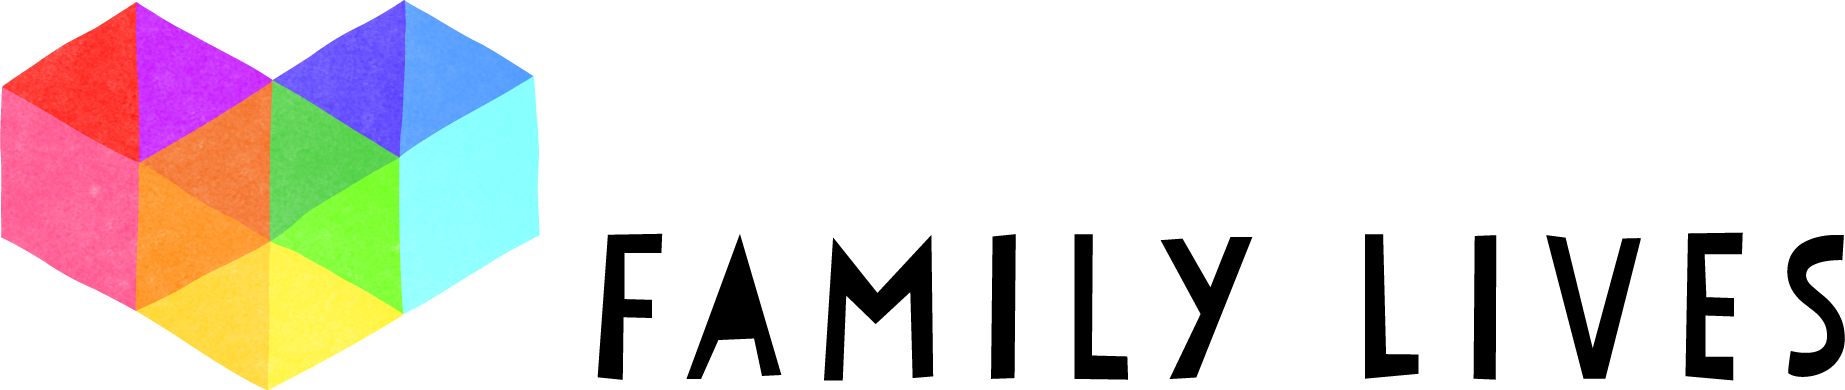 fl logo